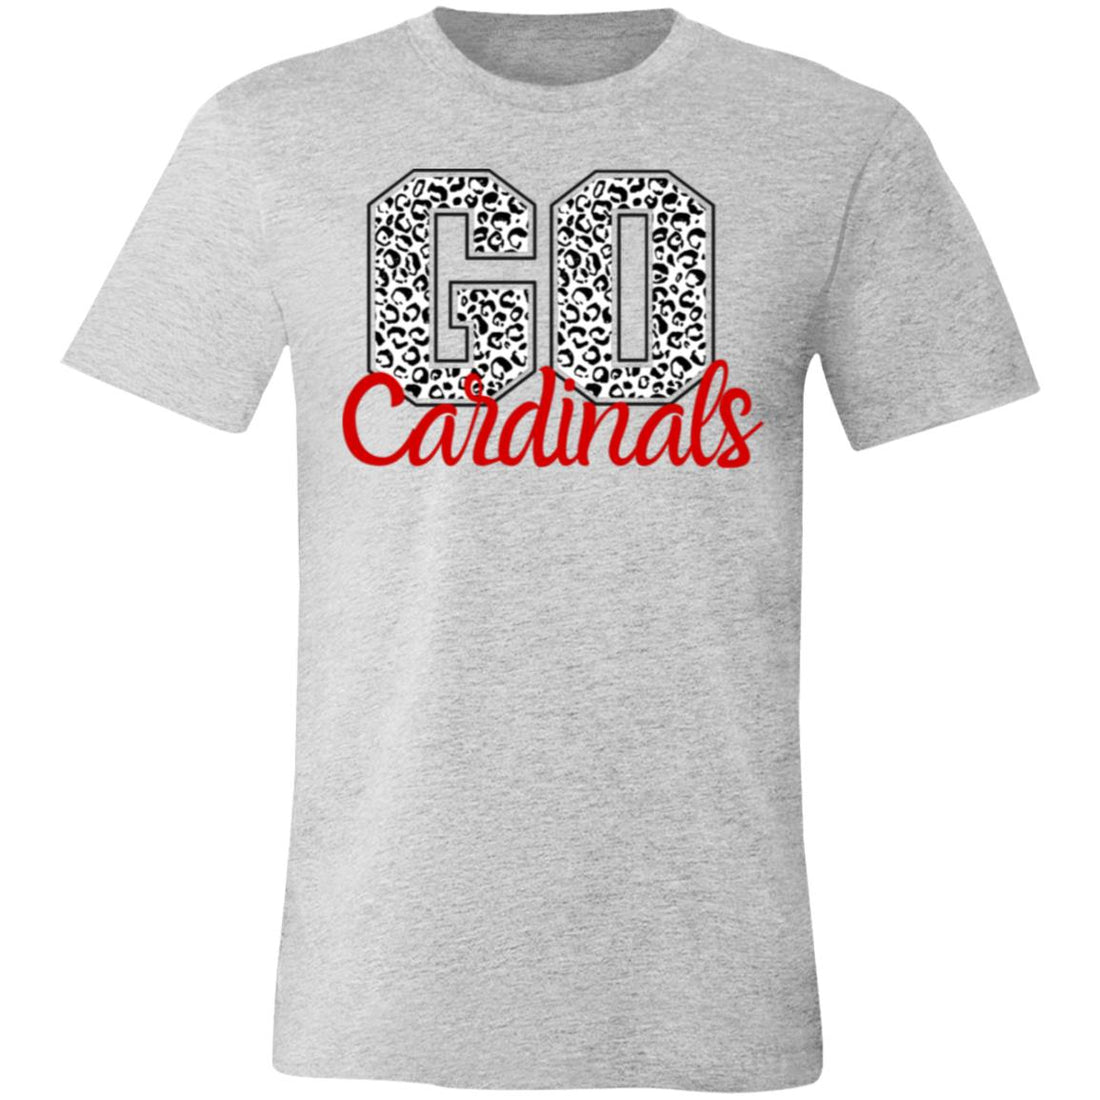 Go Cardinals Print T-Shirt - T-Shirts - Positively Sassy - Go Cardinals Print T-Shirt